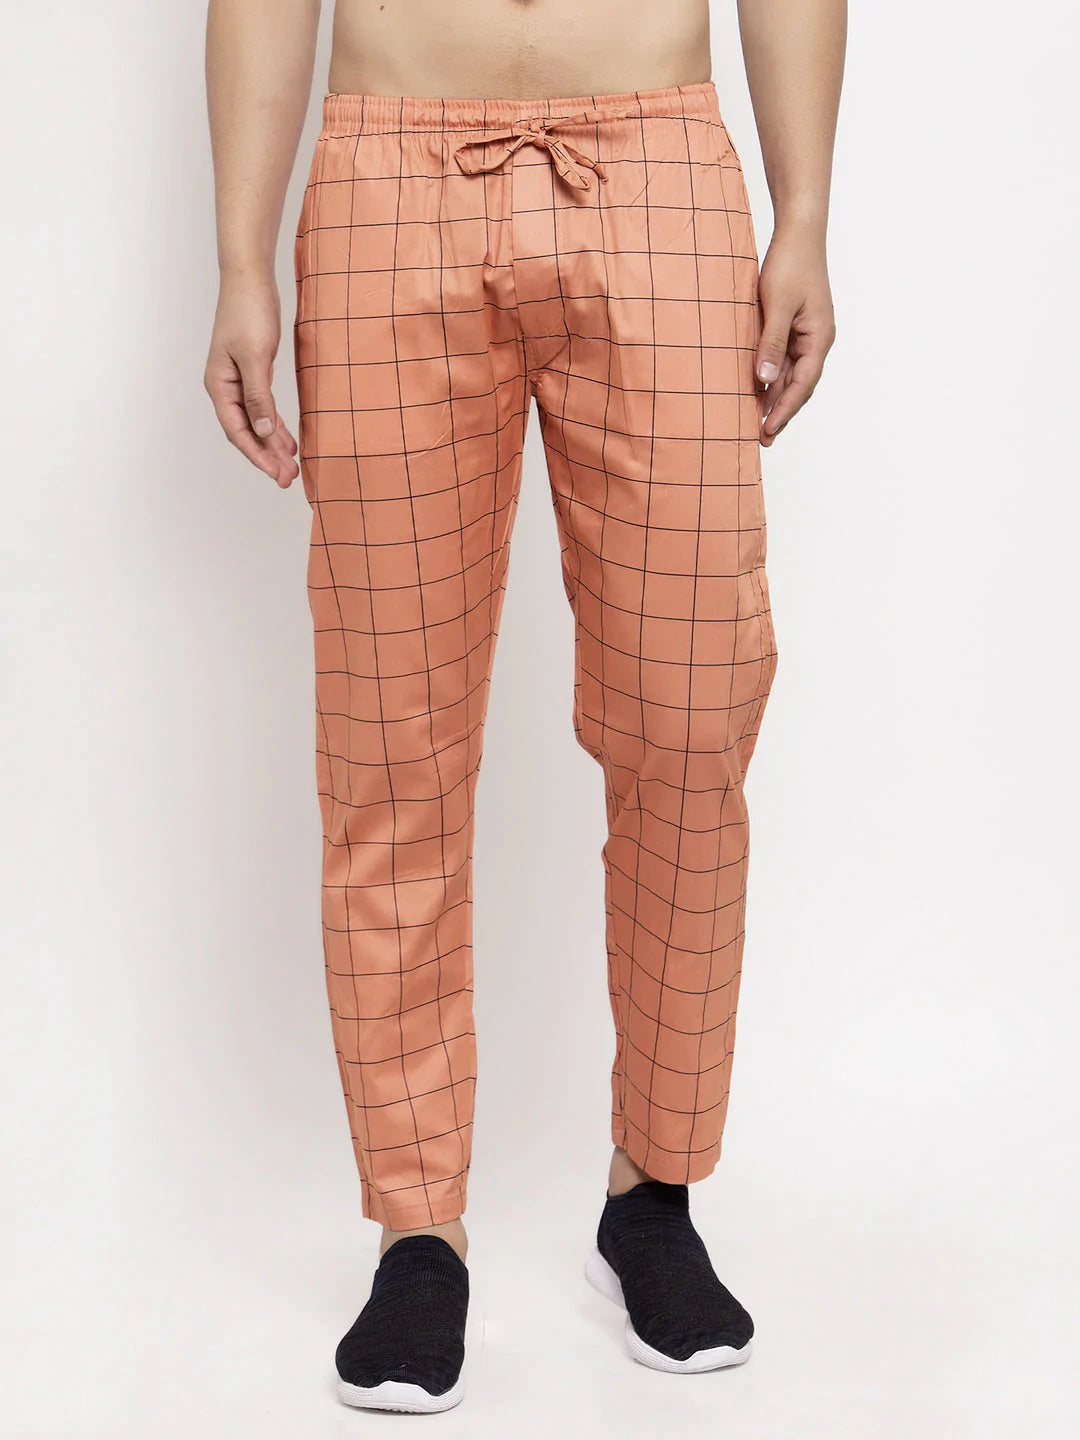 Jainish Men's Orange Checked Cotton Track Pants ( JOG 012Orange )